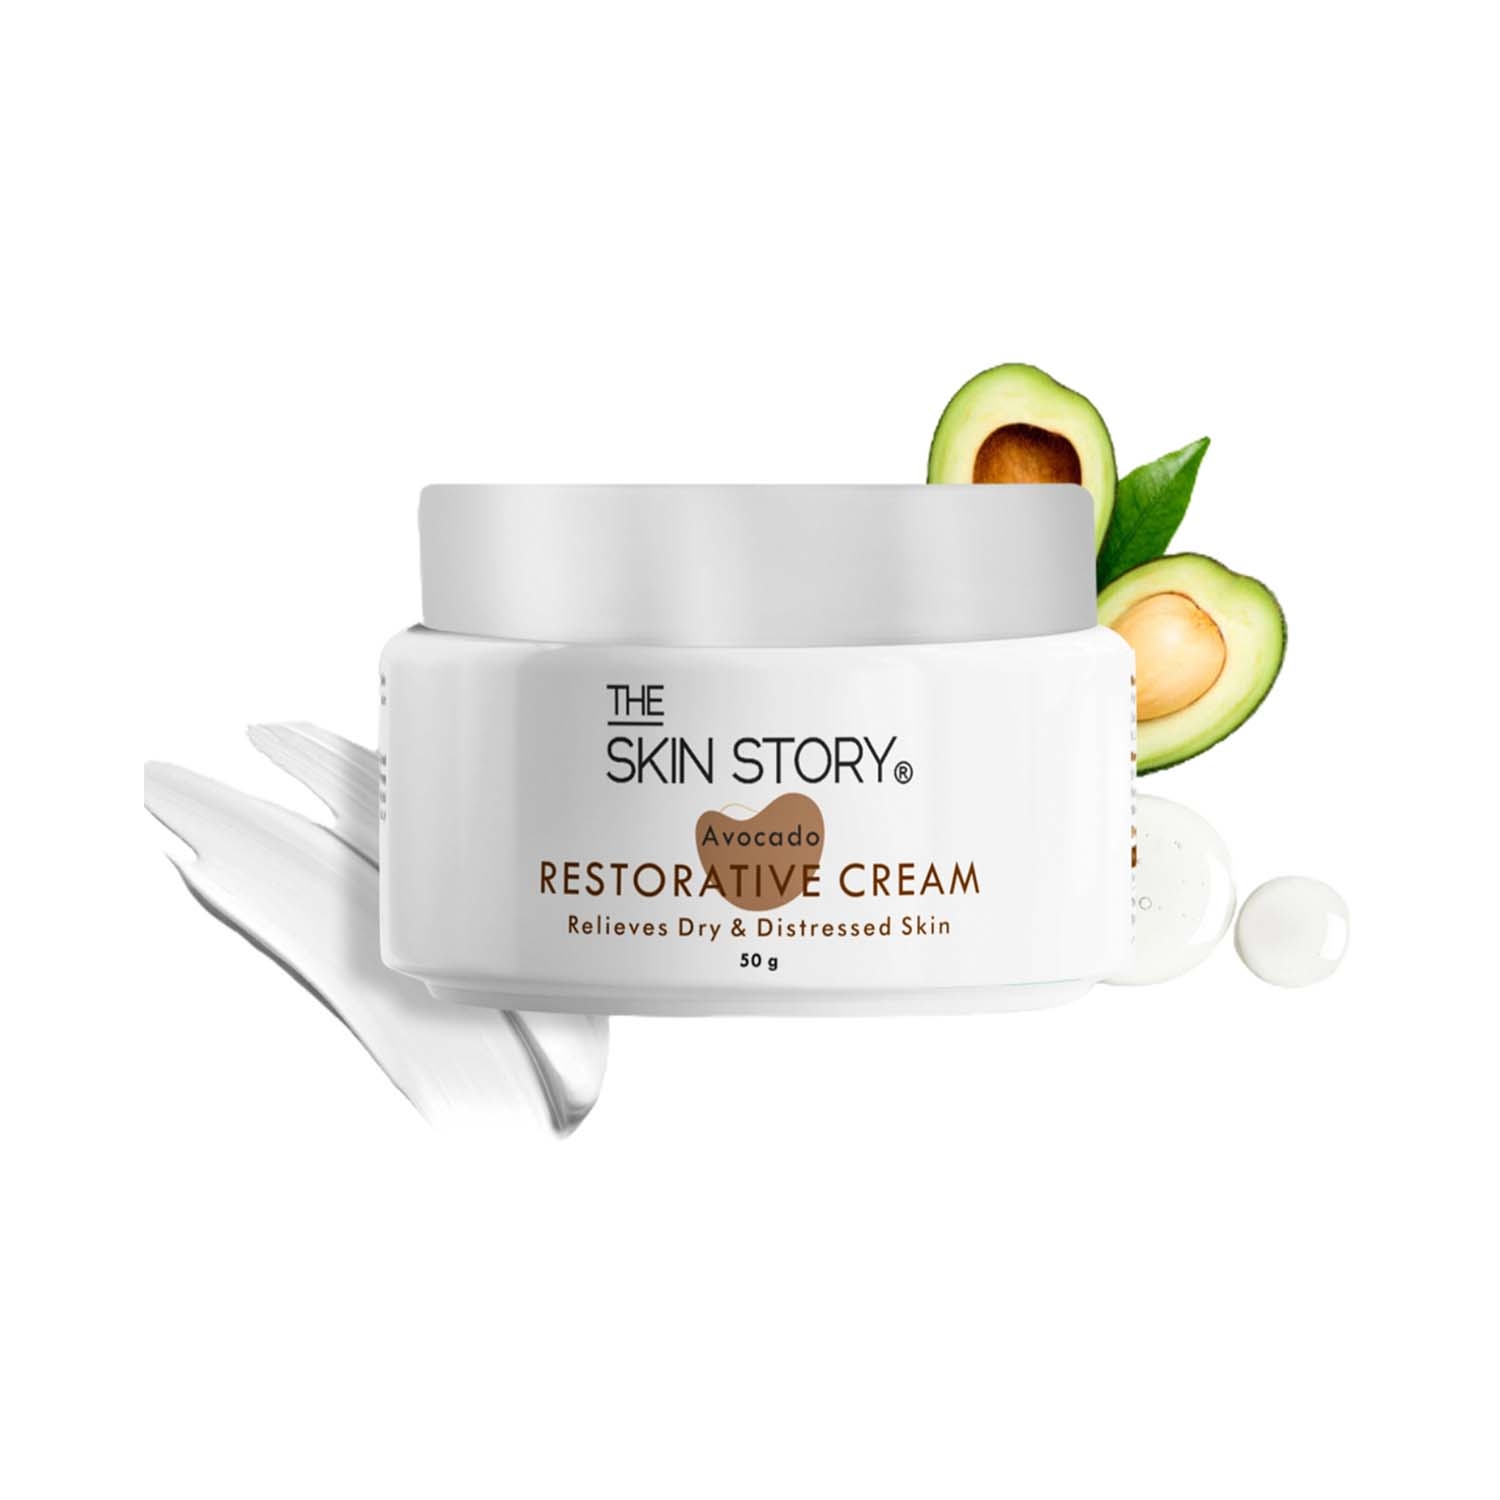 The Skin Story Avocado Restorative Cream (50g)